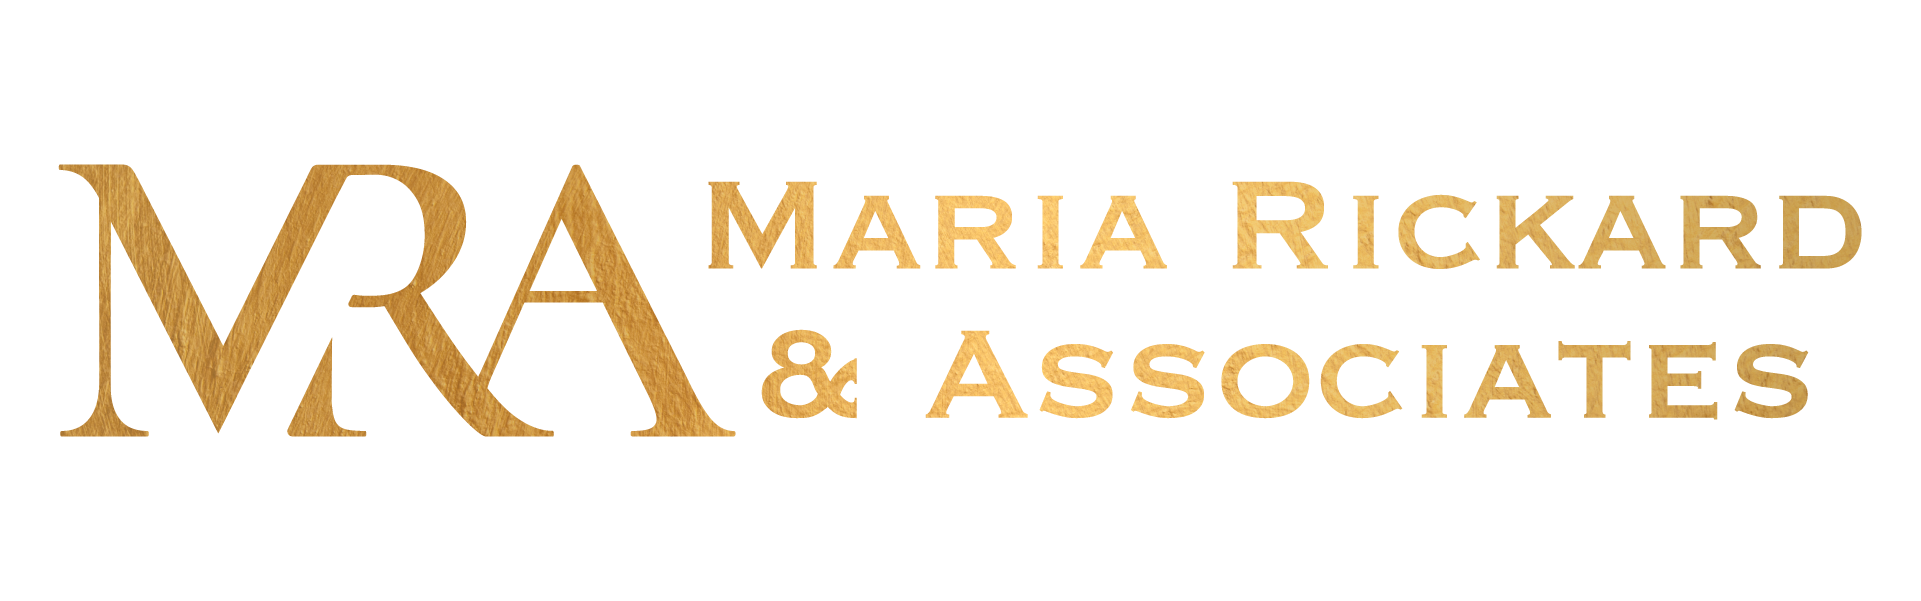 Maria Rickard & Associates